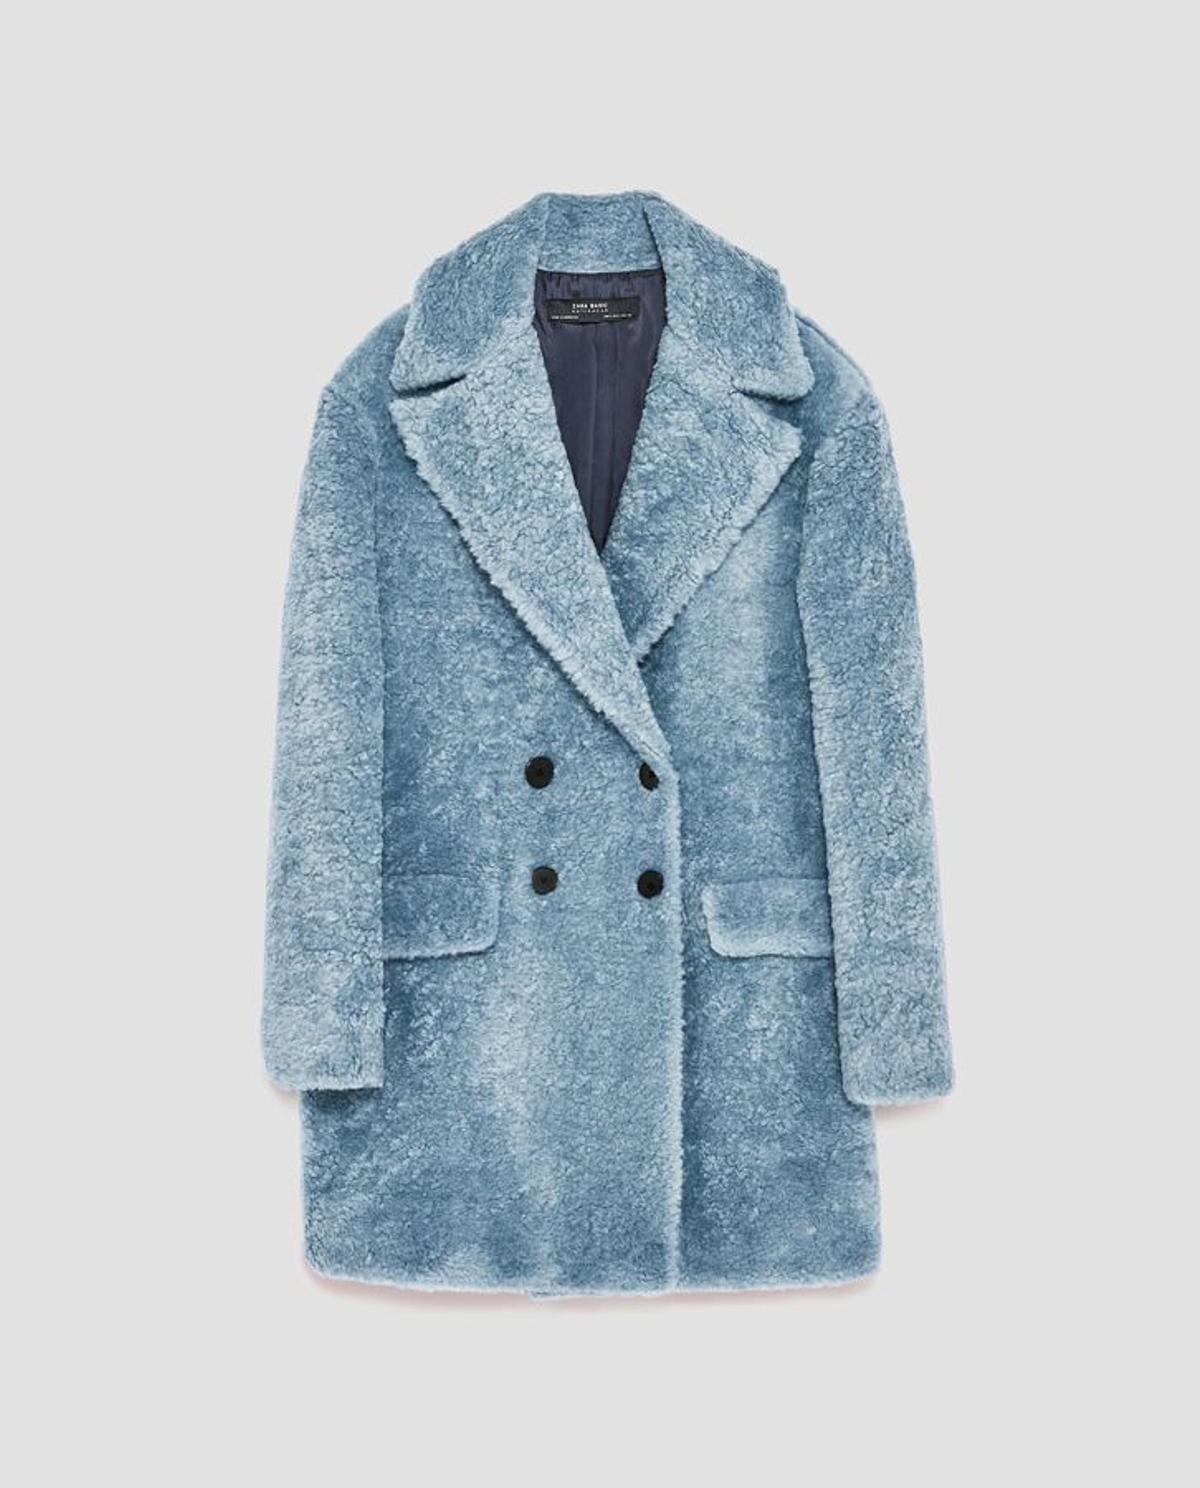 'Shopping' para el Black Friday: abrigo azul, de Zara